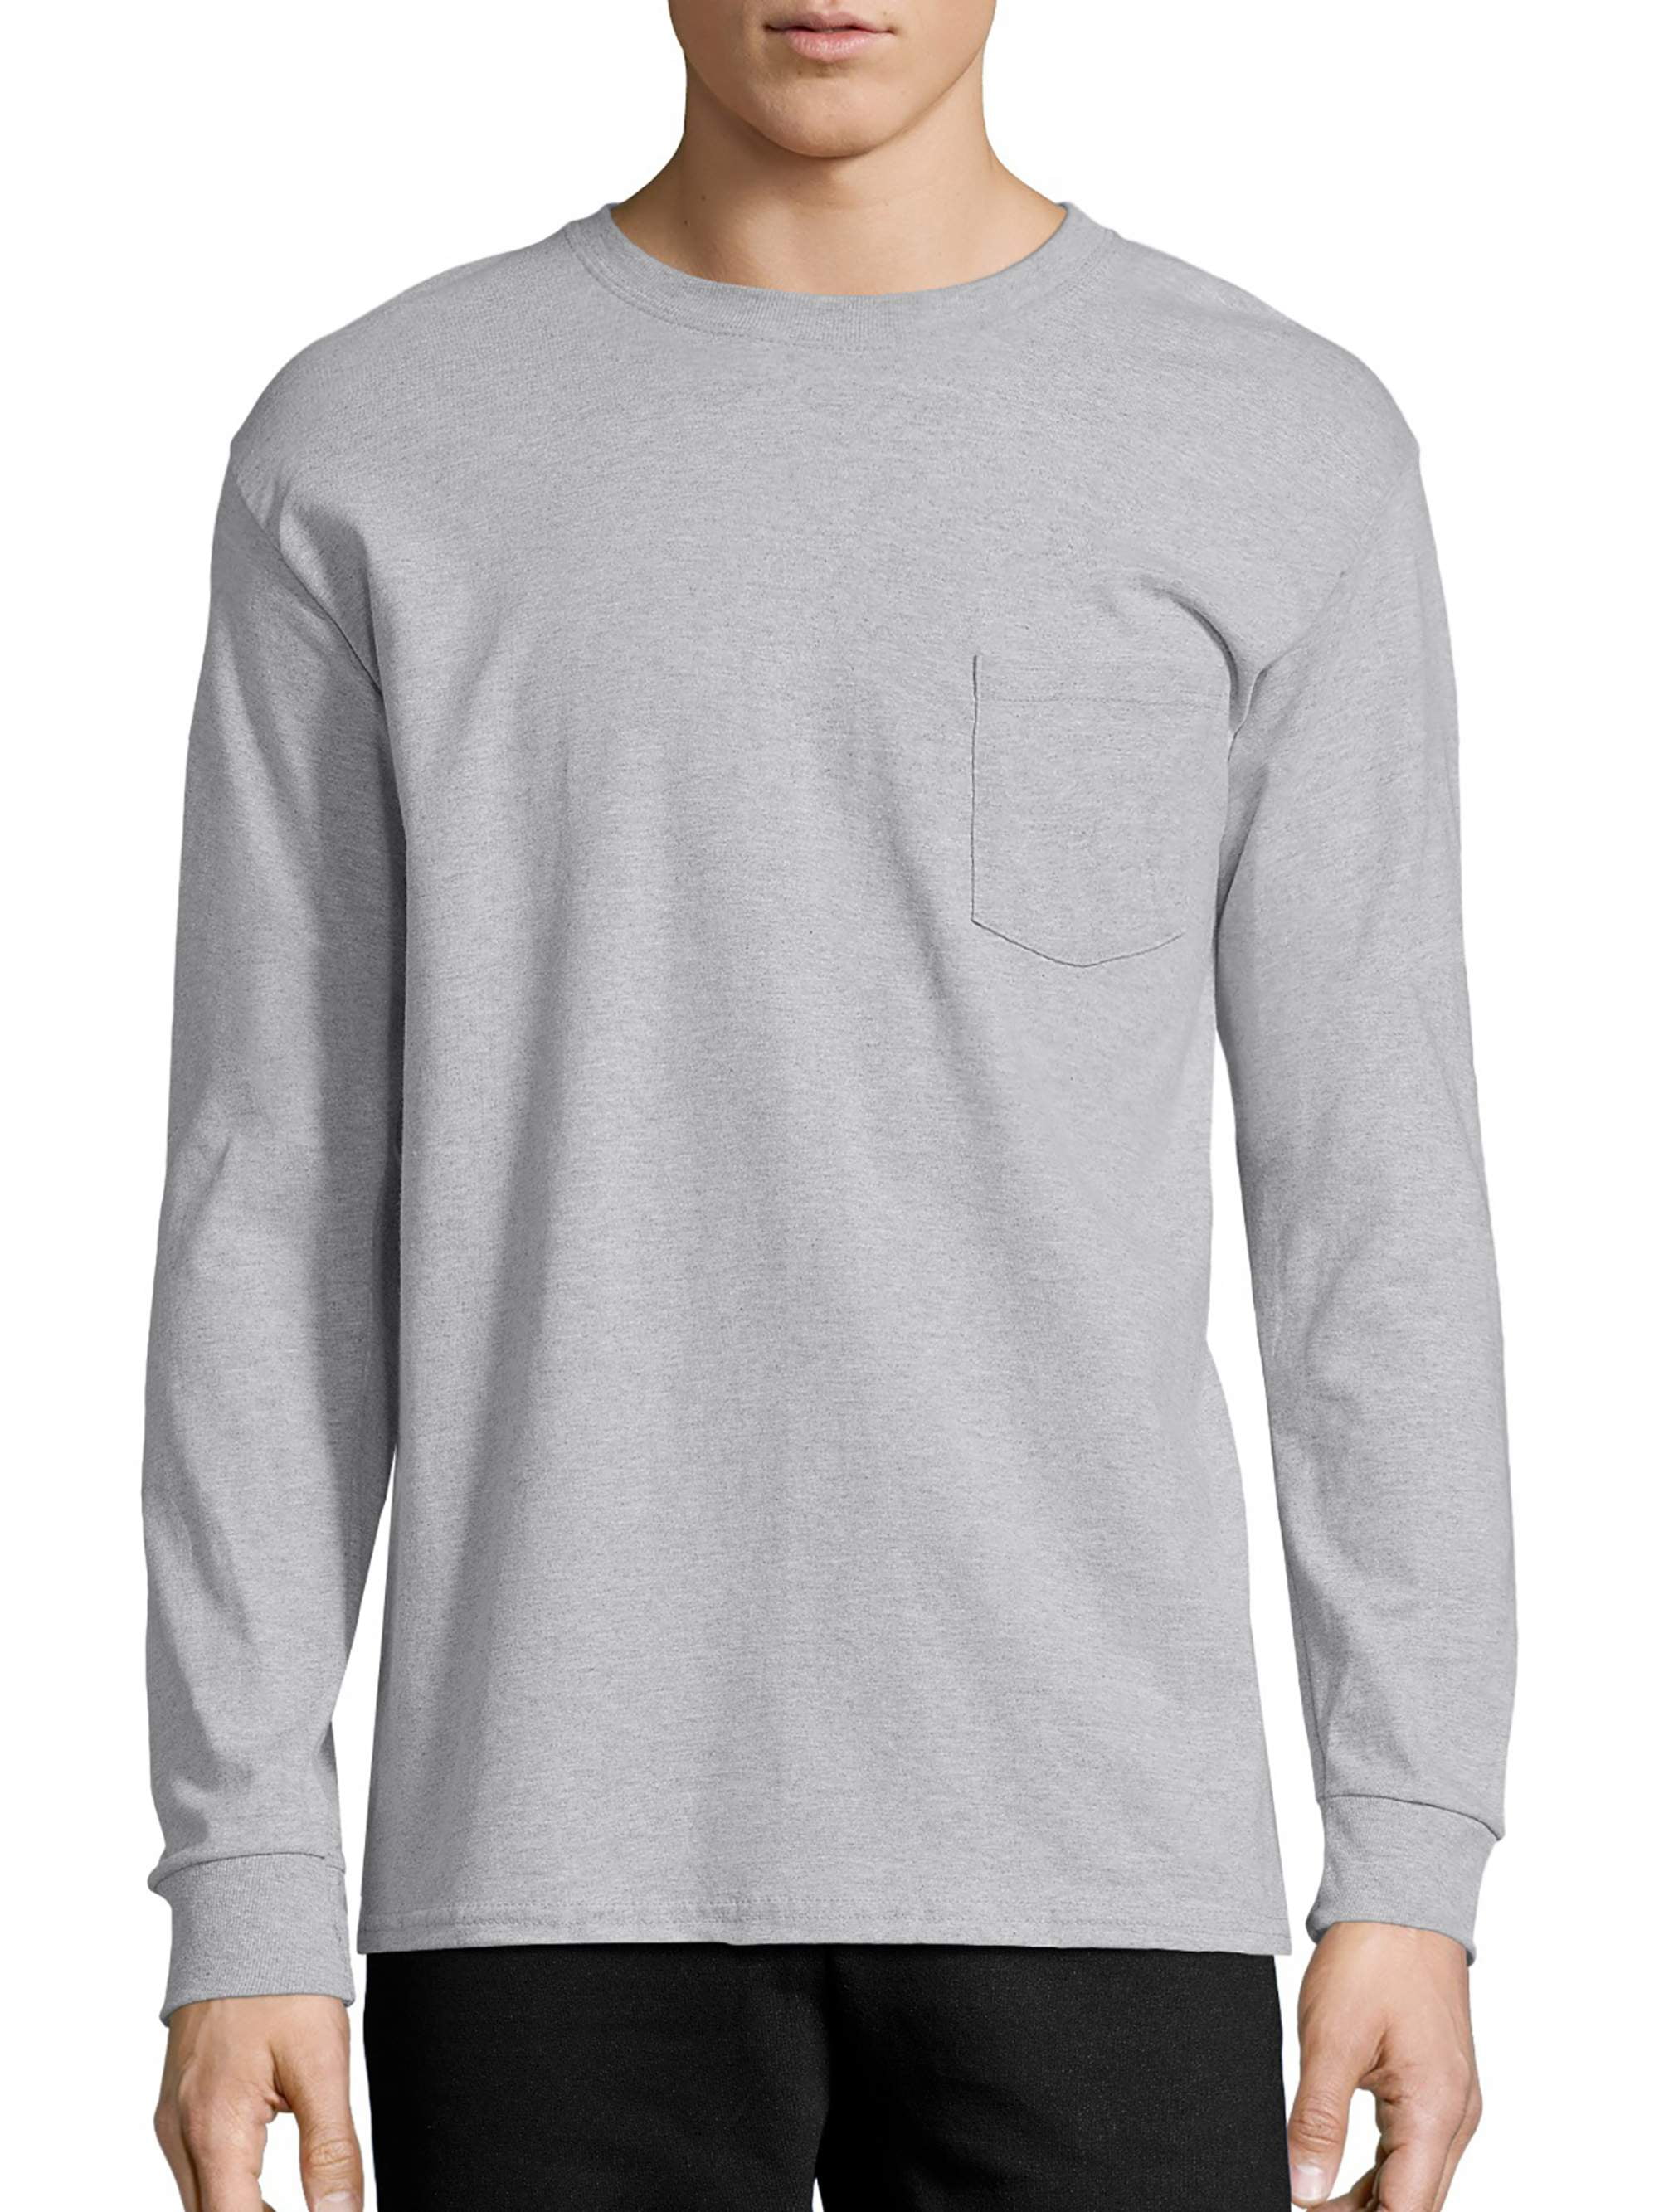 Boys Long Sleeve Pocket Shirts 4-Pack Jersey Pocket and Crewneck Tee Shirts Tagless. 